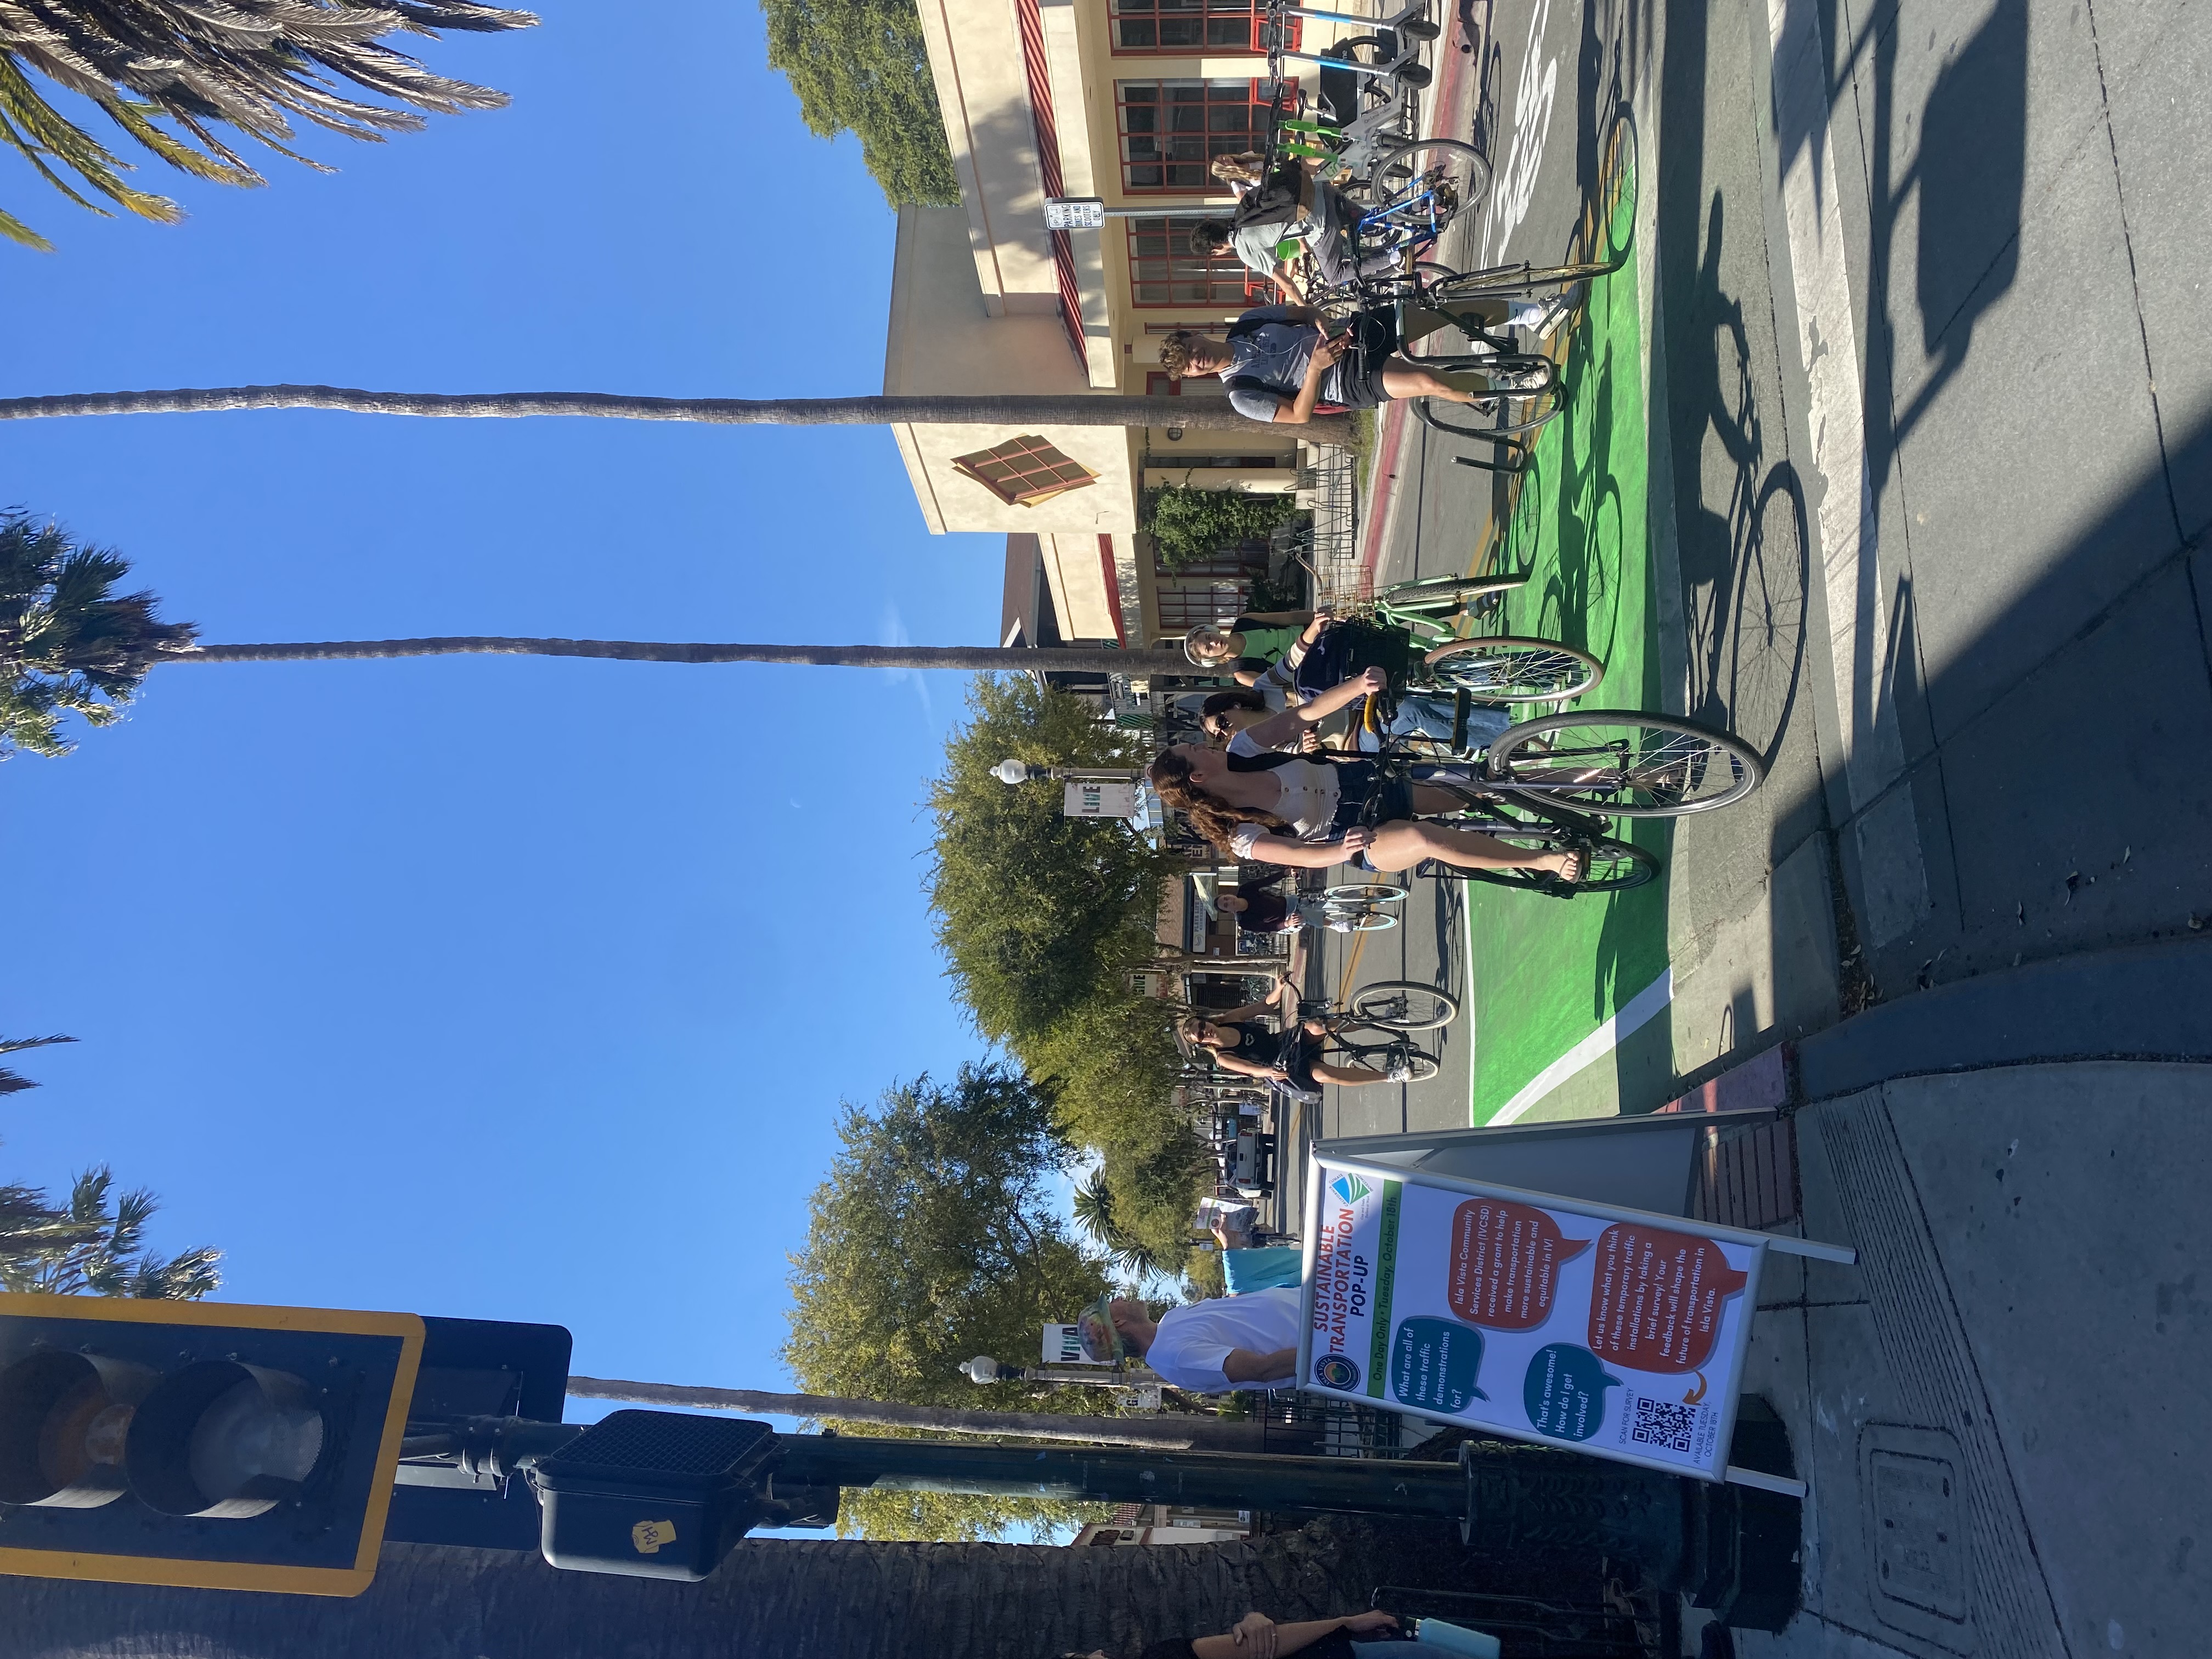 Community event with bikes and dedicated bike lane demo